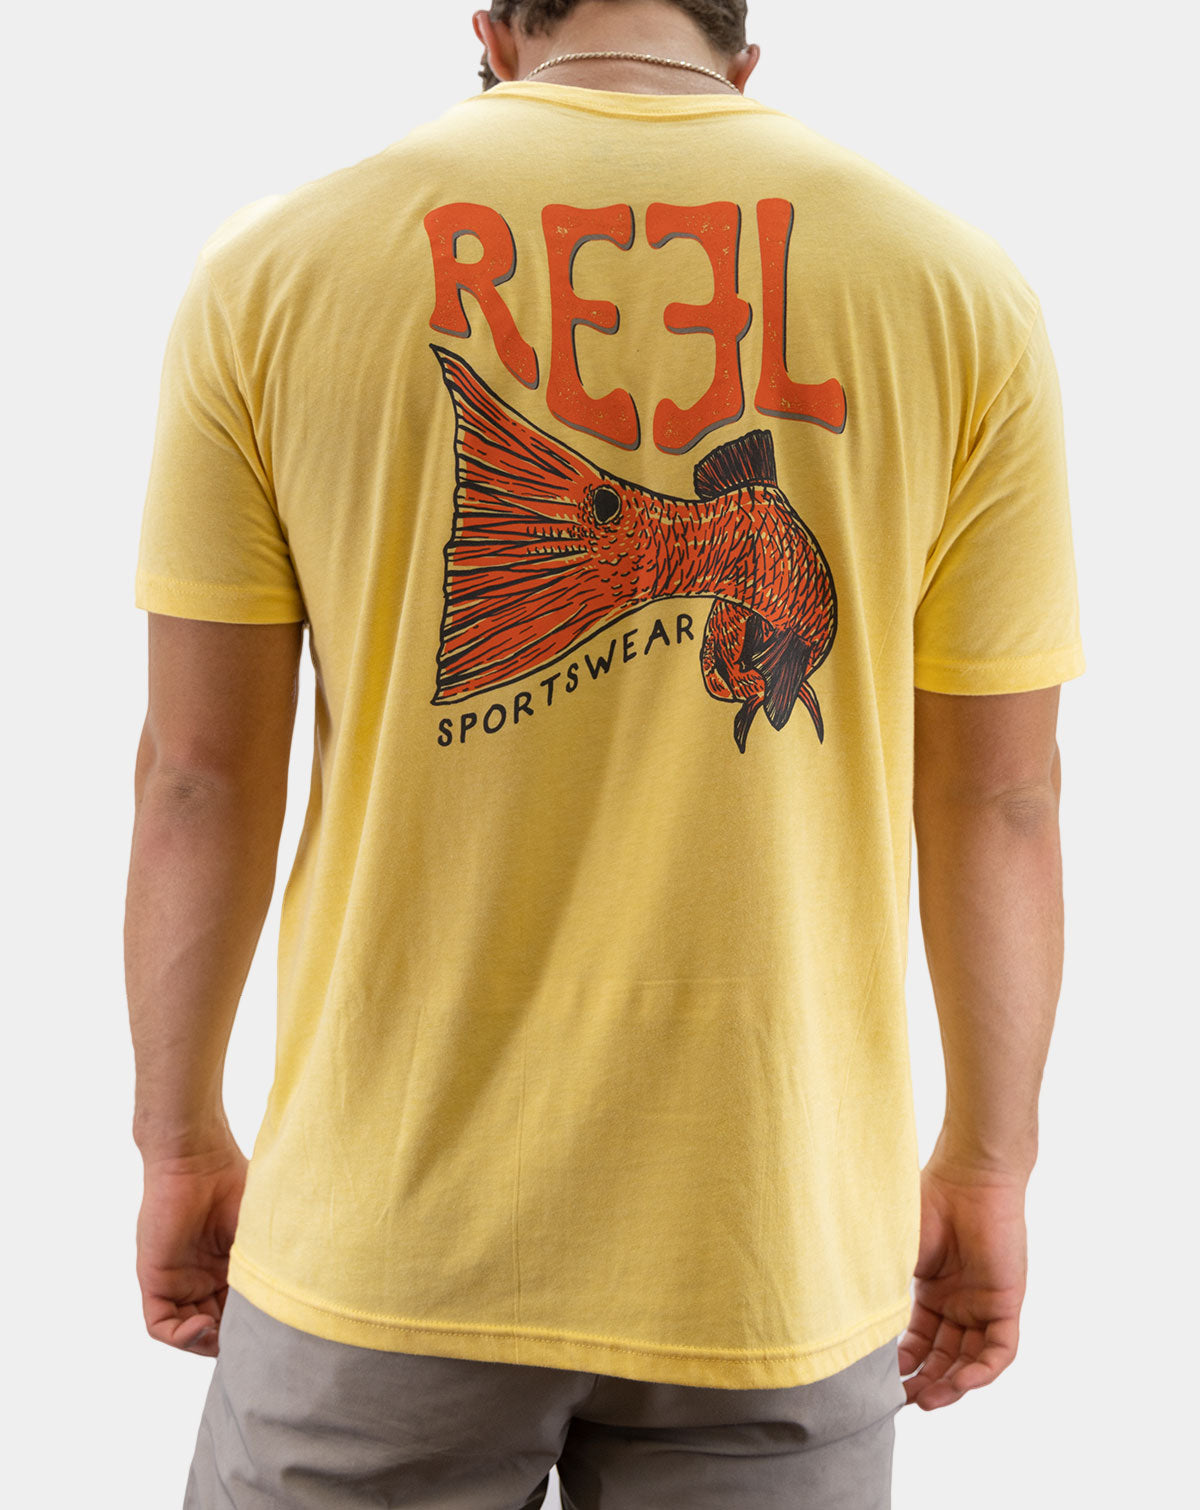 Keep It Reel T-Shirt  Fishing shirts, Funny fishing shirts, T shirt